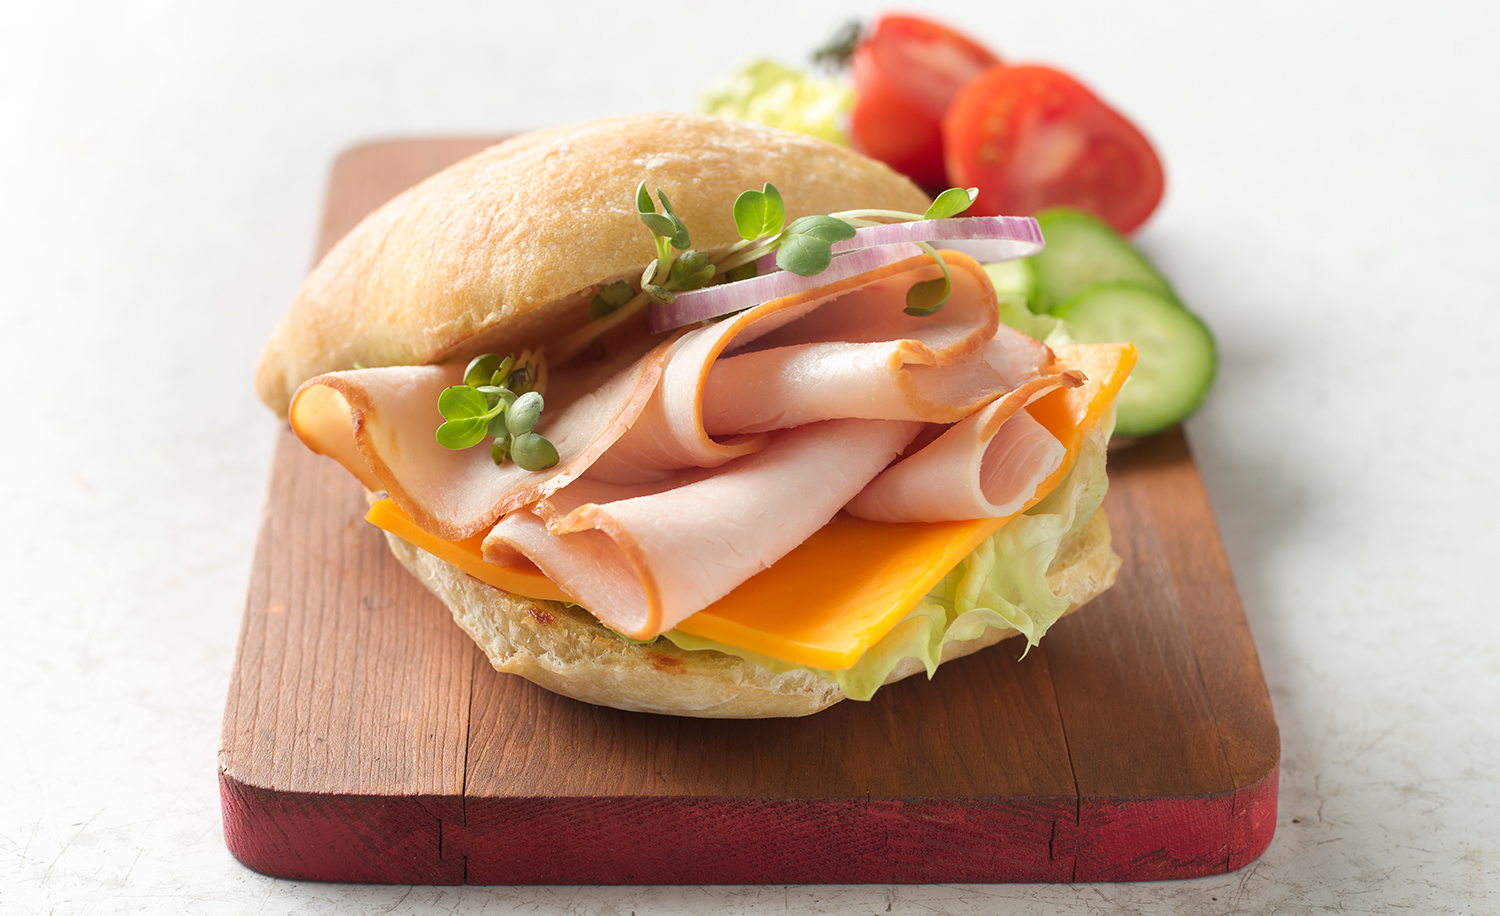 Sliced Turkey Sandwich | Tony Kubat Photography